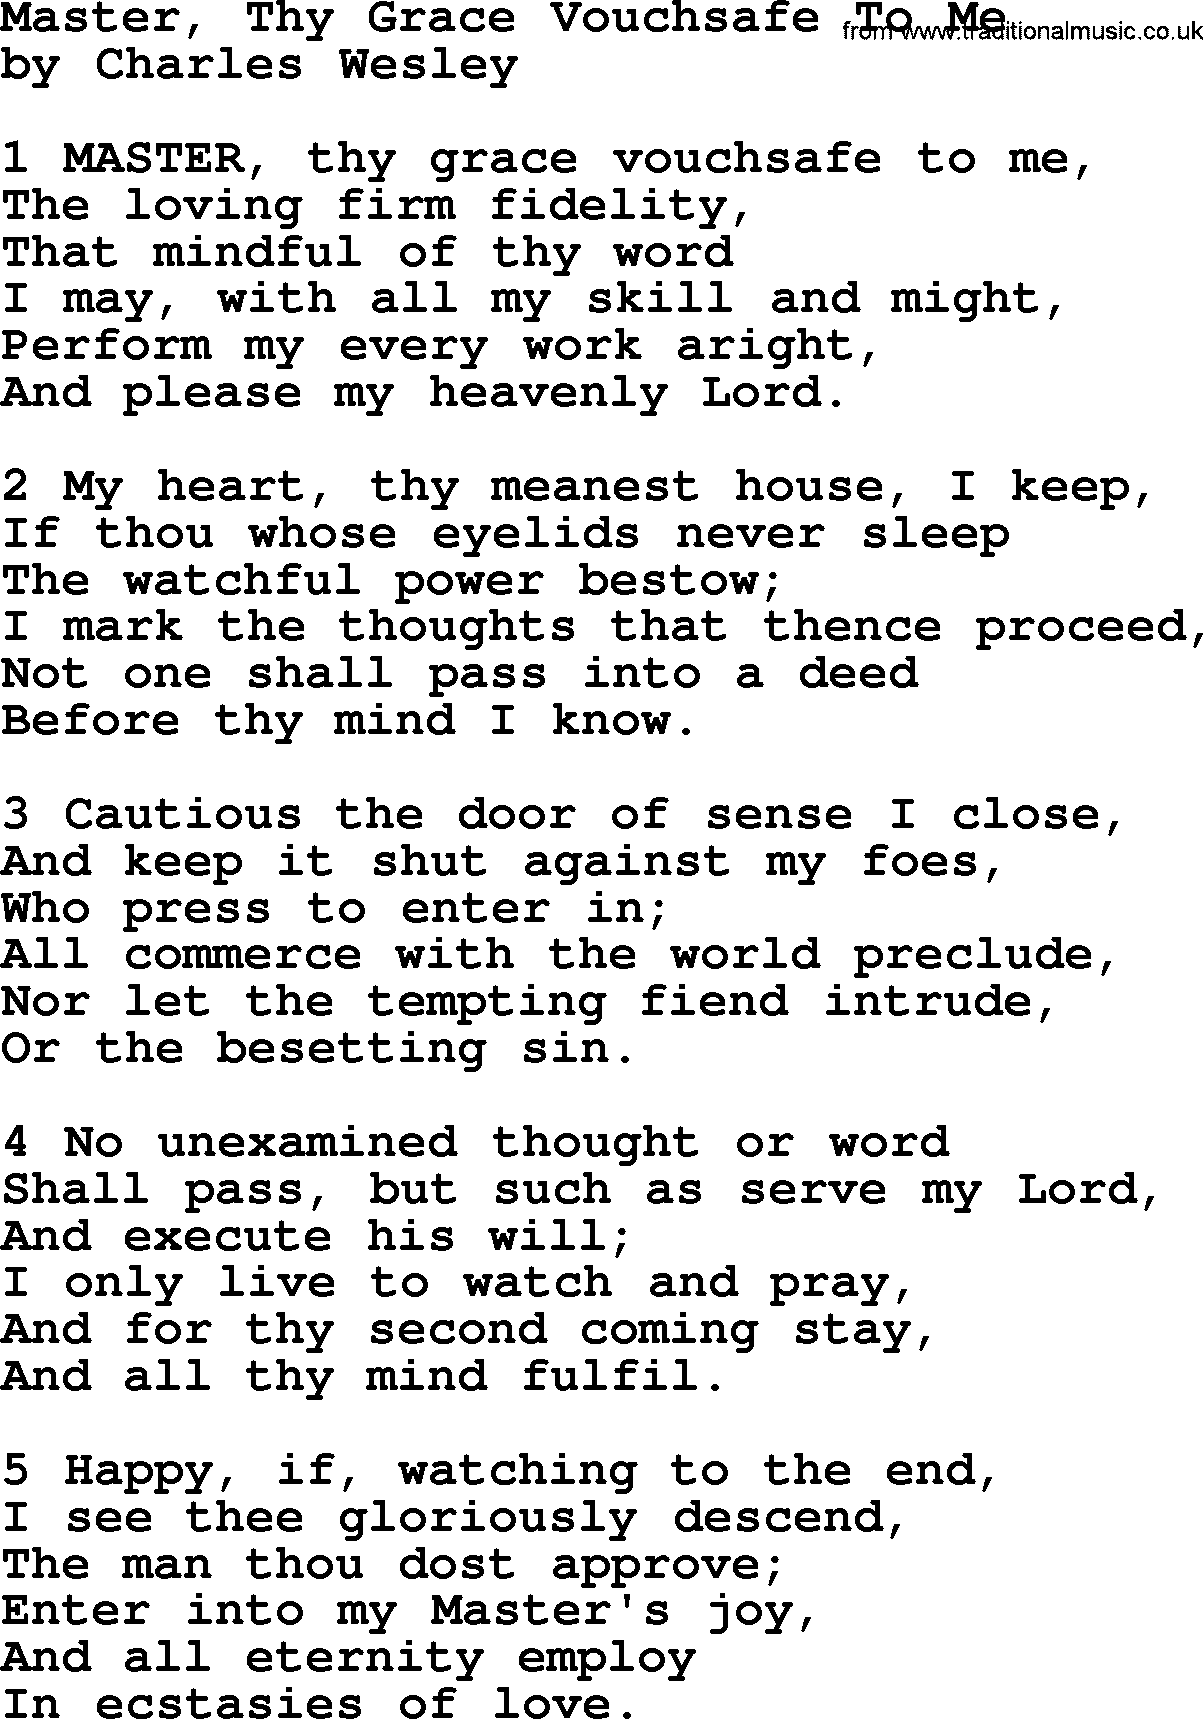 Charles Wesley hymn: Master, Thy Grace Vouchsafe To Me, lyrics